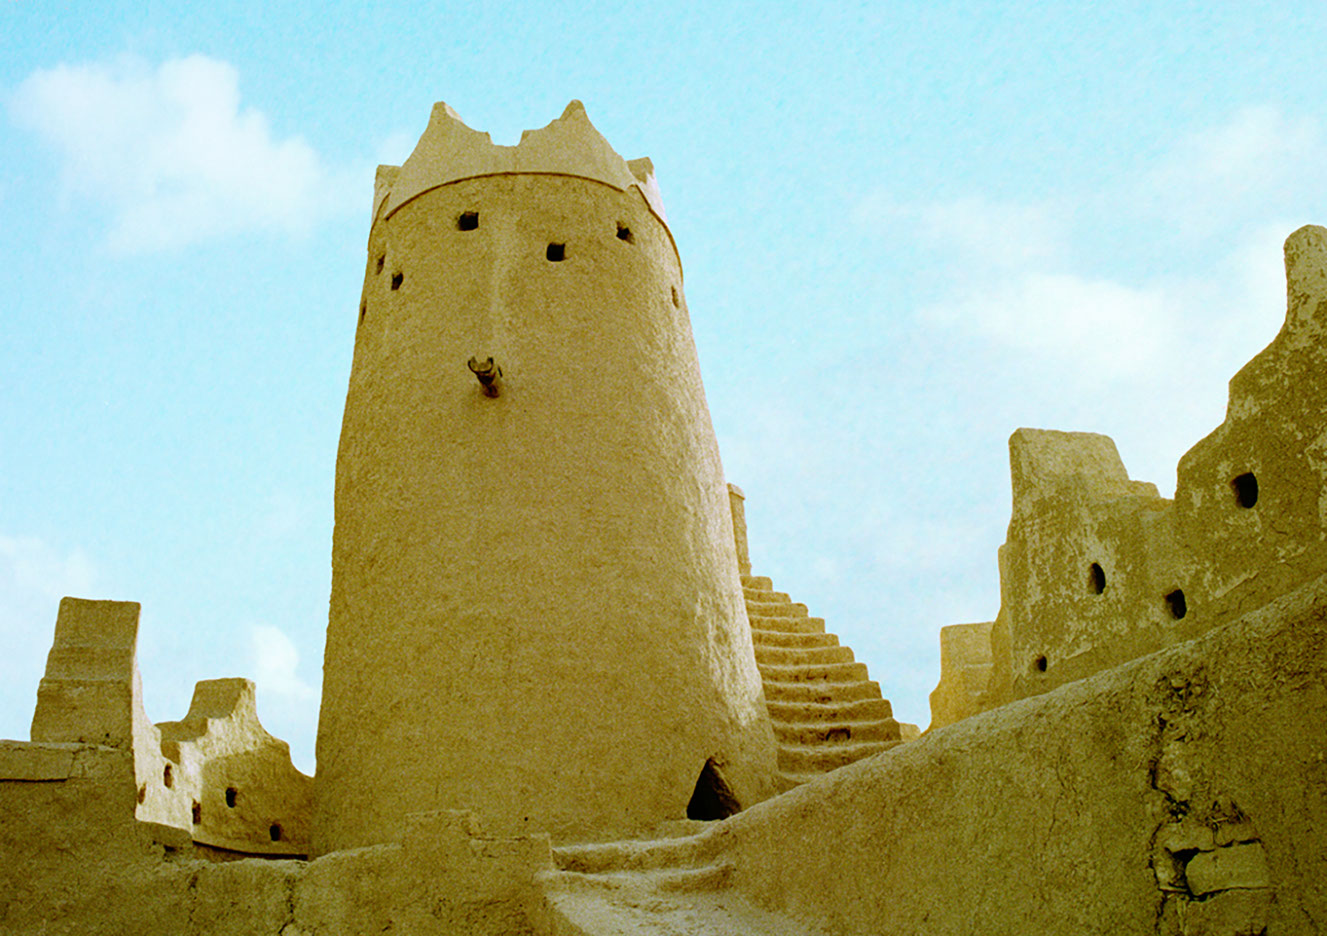 Old "Mud-Brick" Fort, Diriyah, Riyadh, Saudi Arabia.  